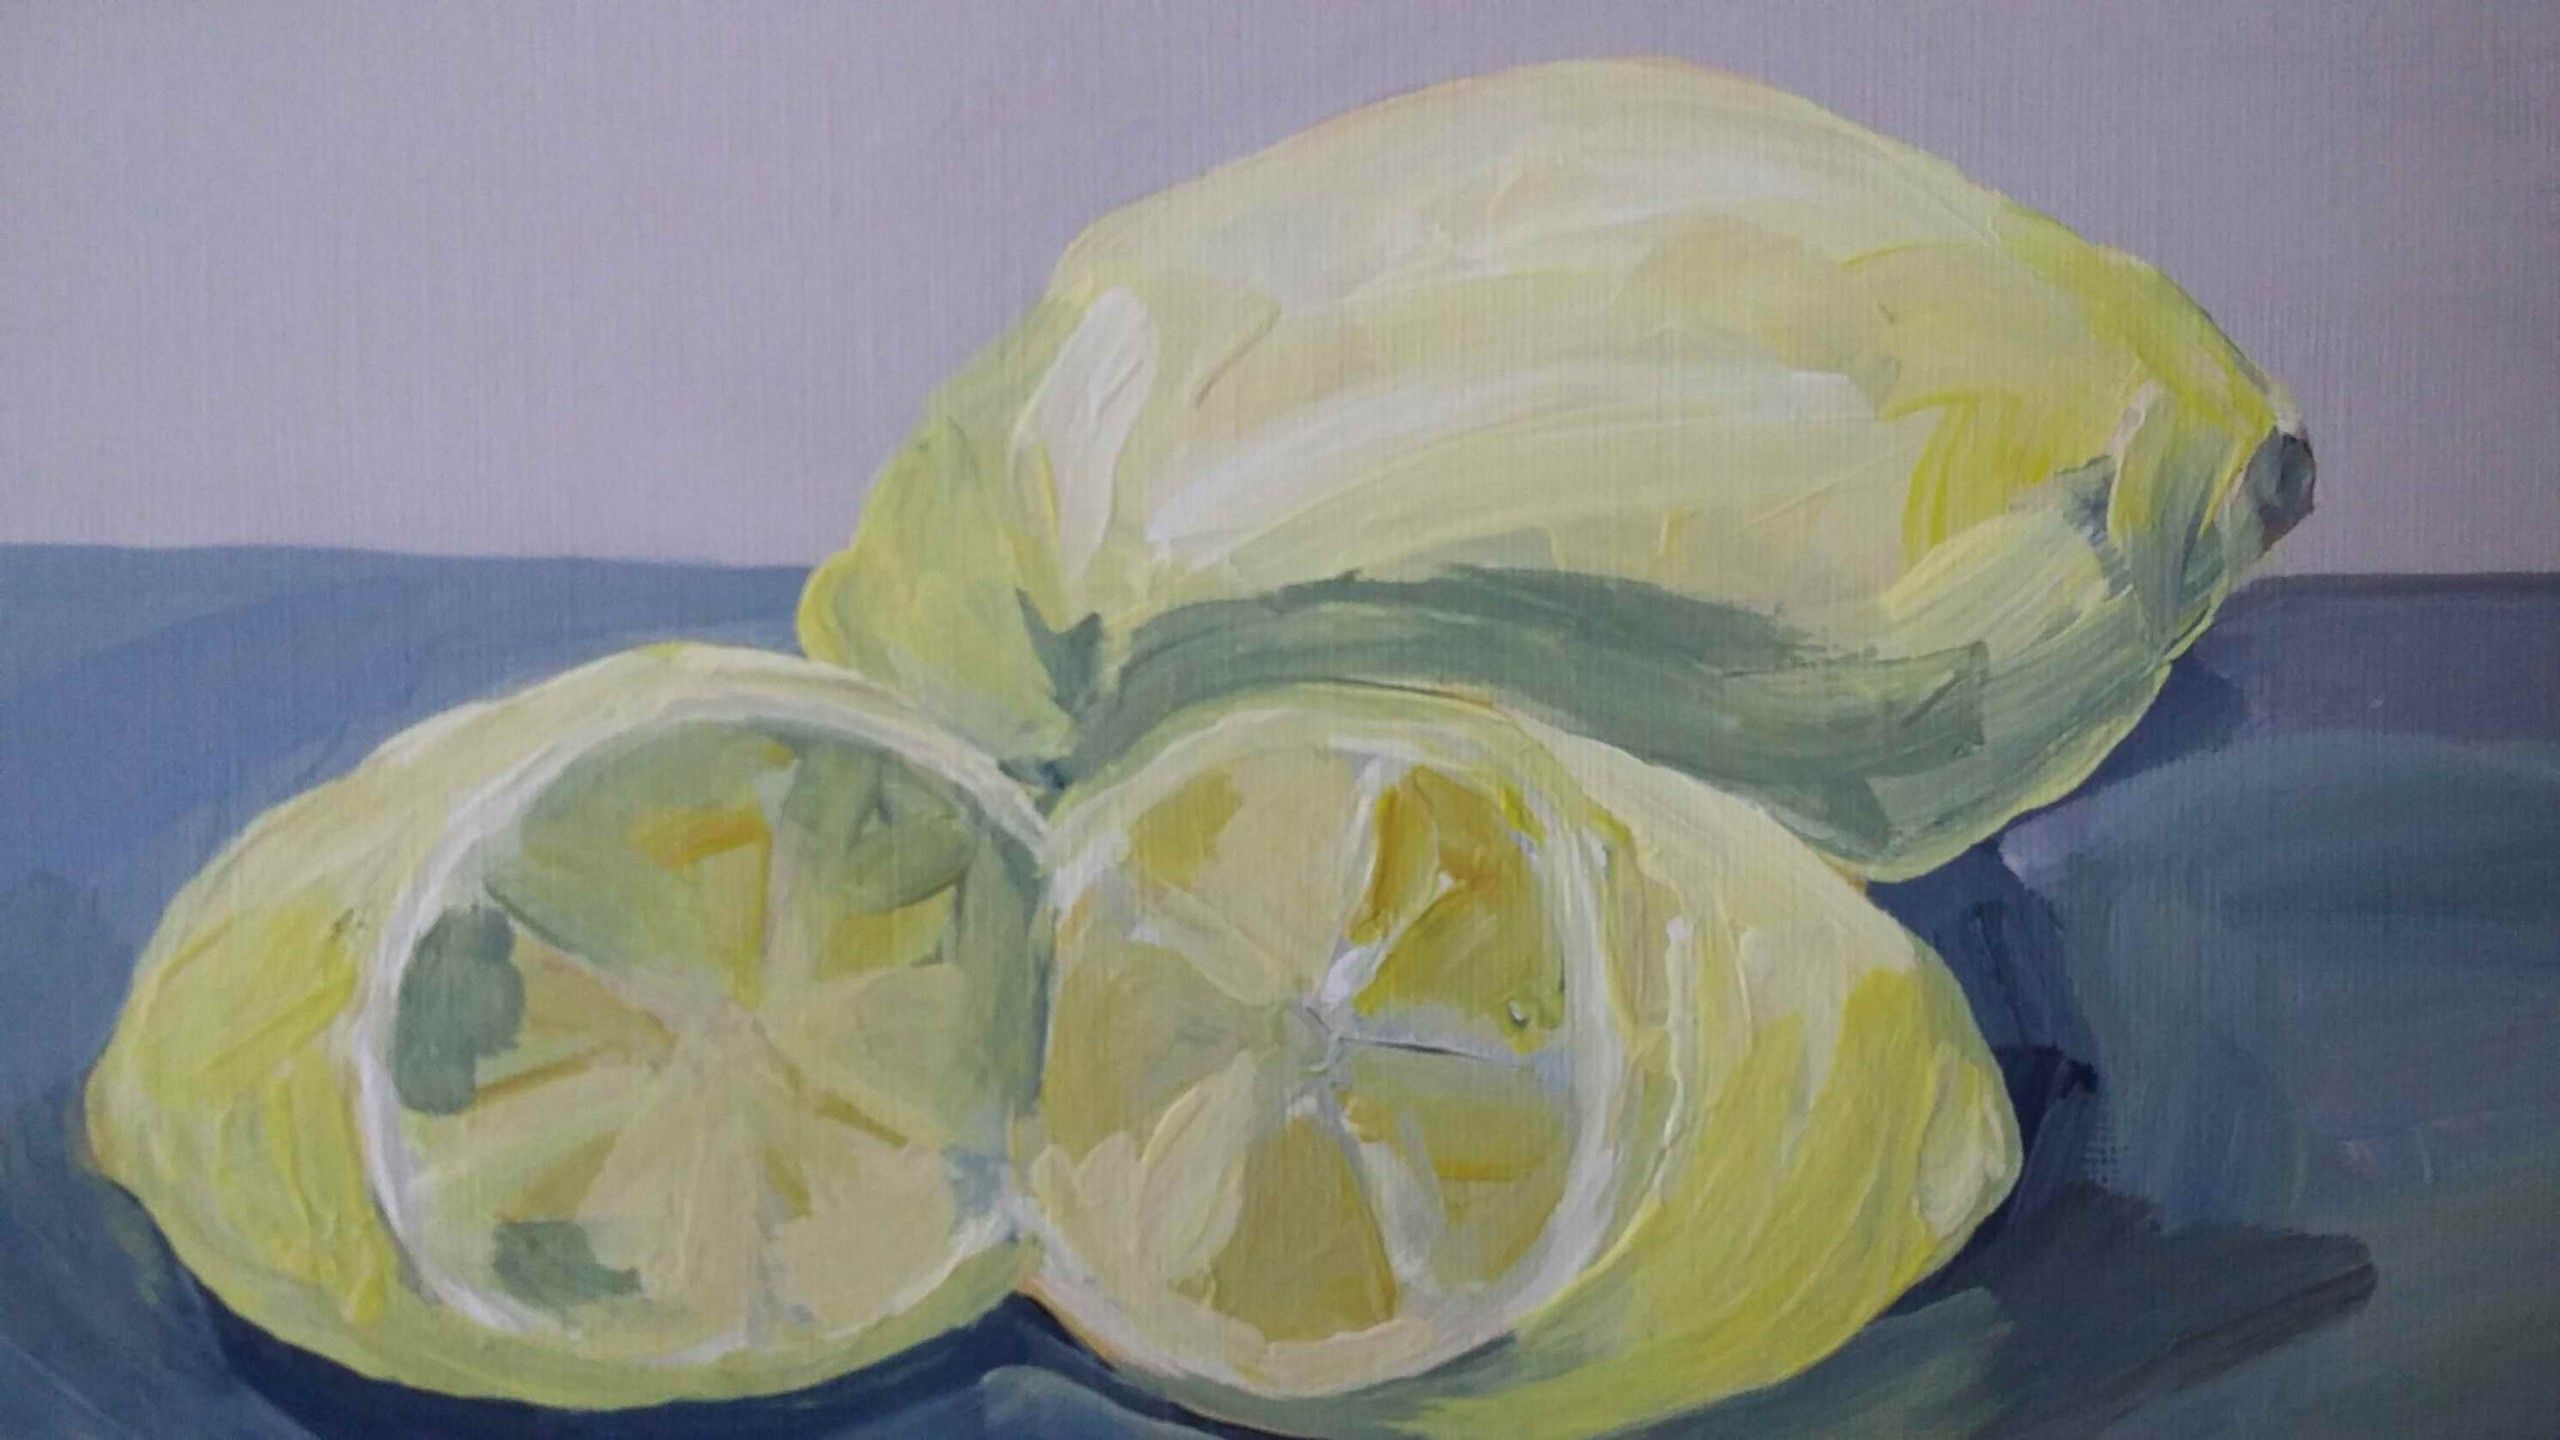 One Lemon and a cut Lemon by Sarah Adams